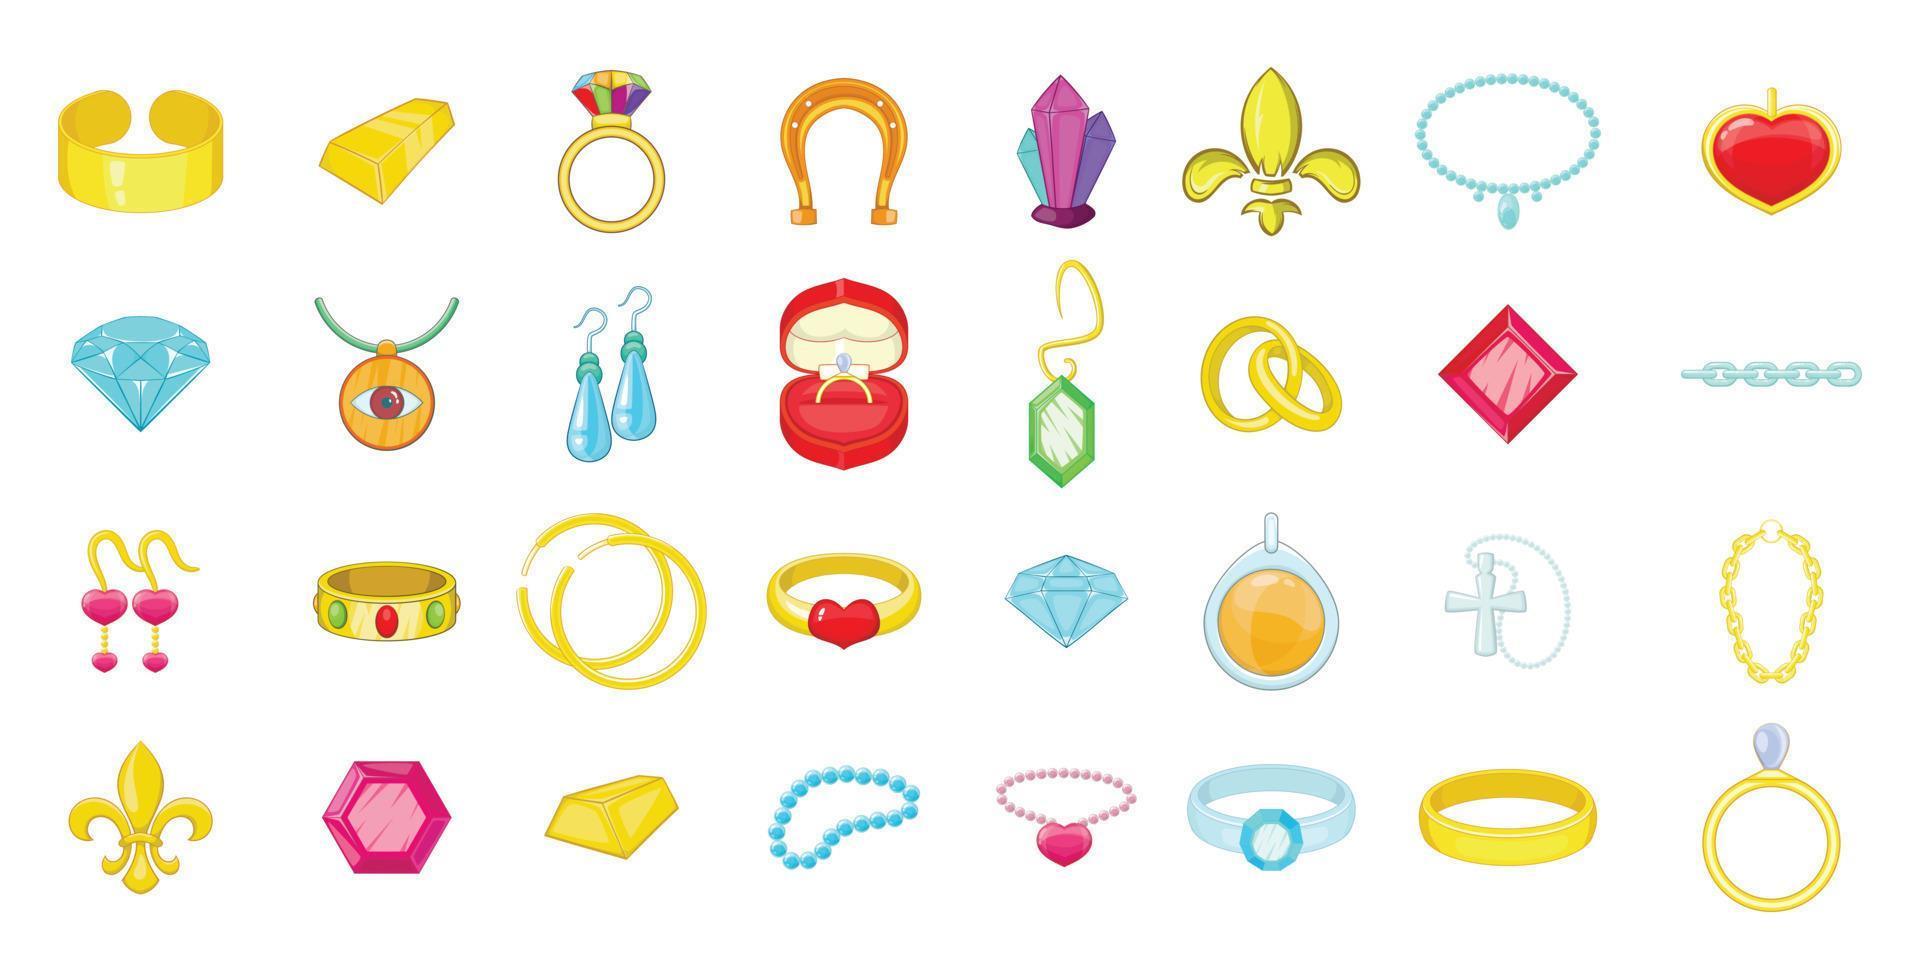 juwelen icon set, cartoon stijl vector